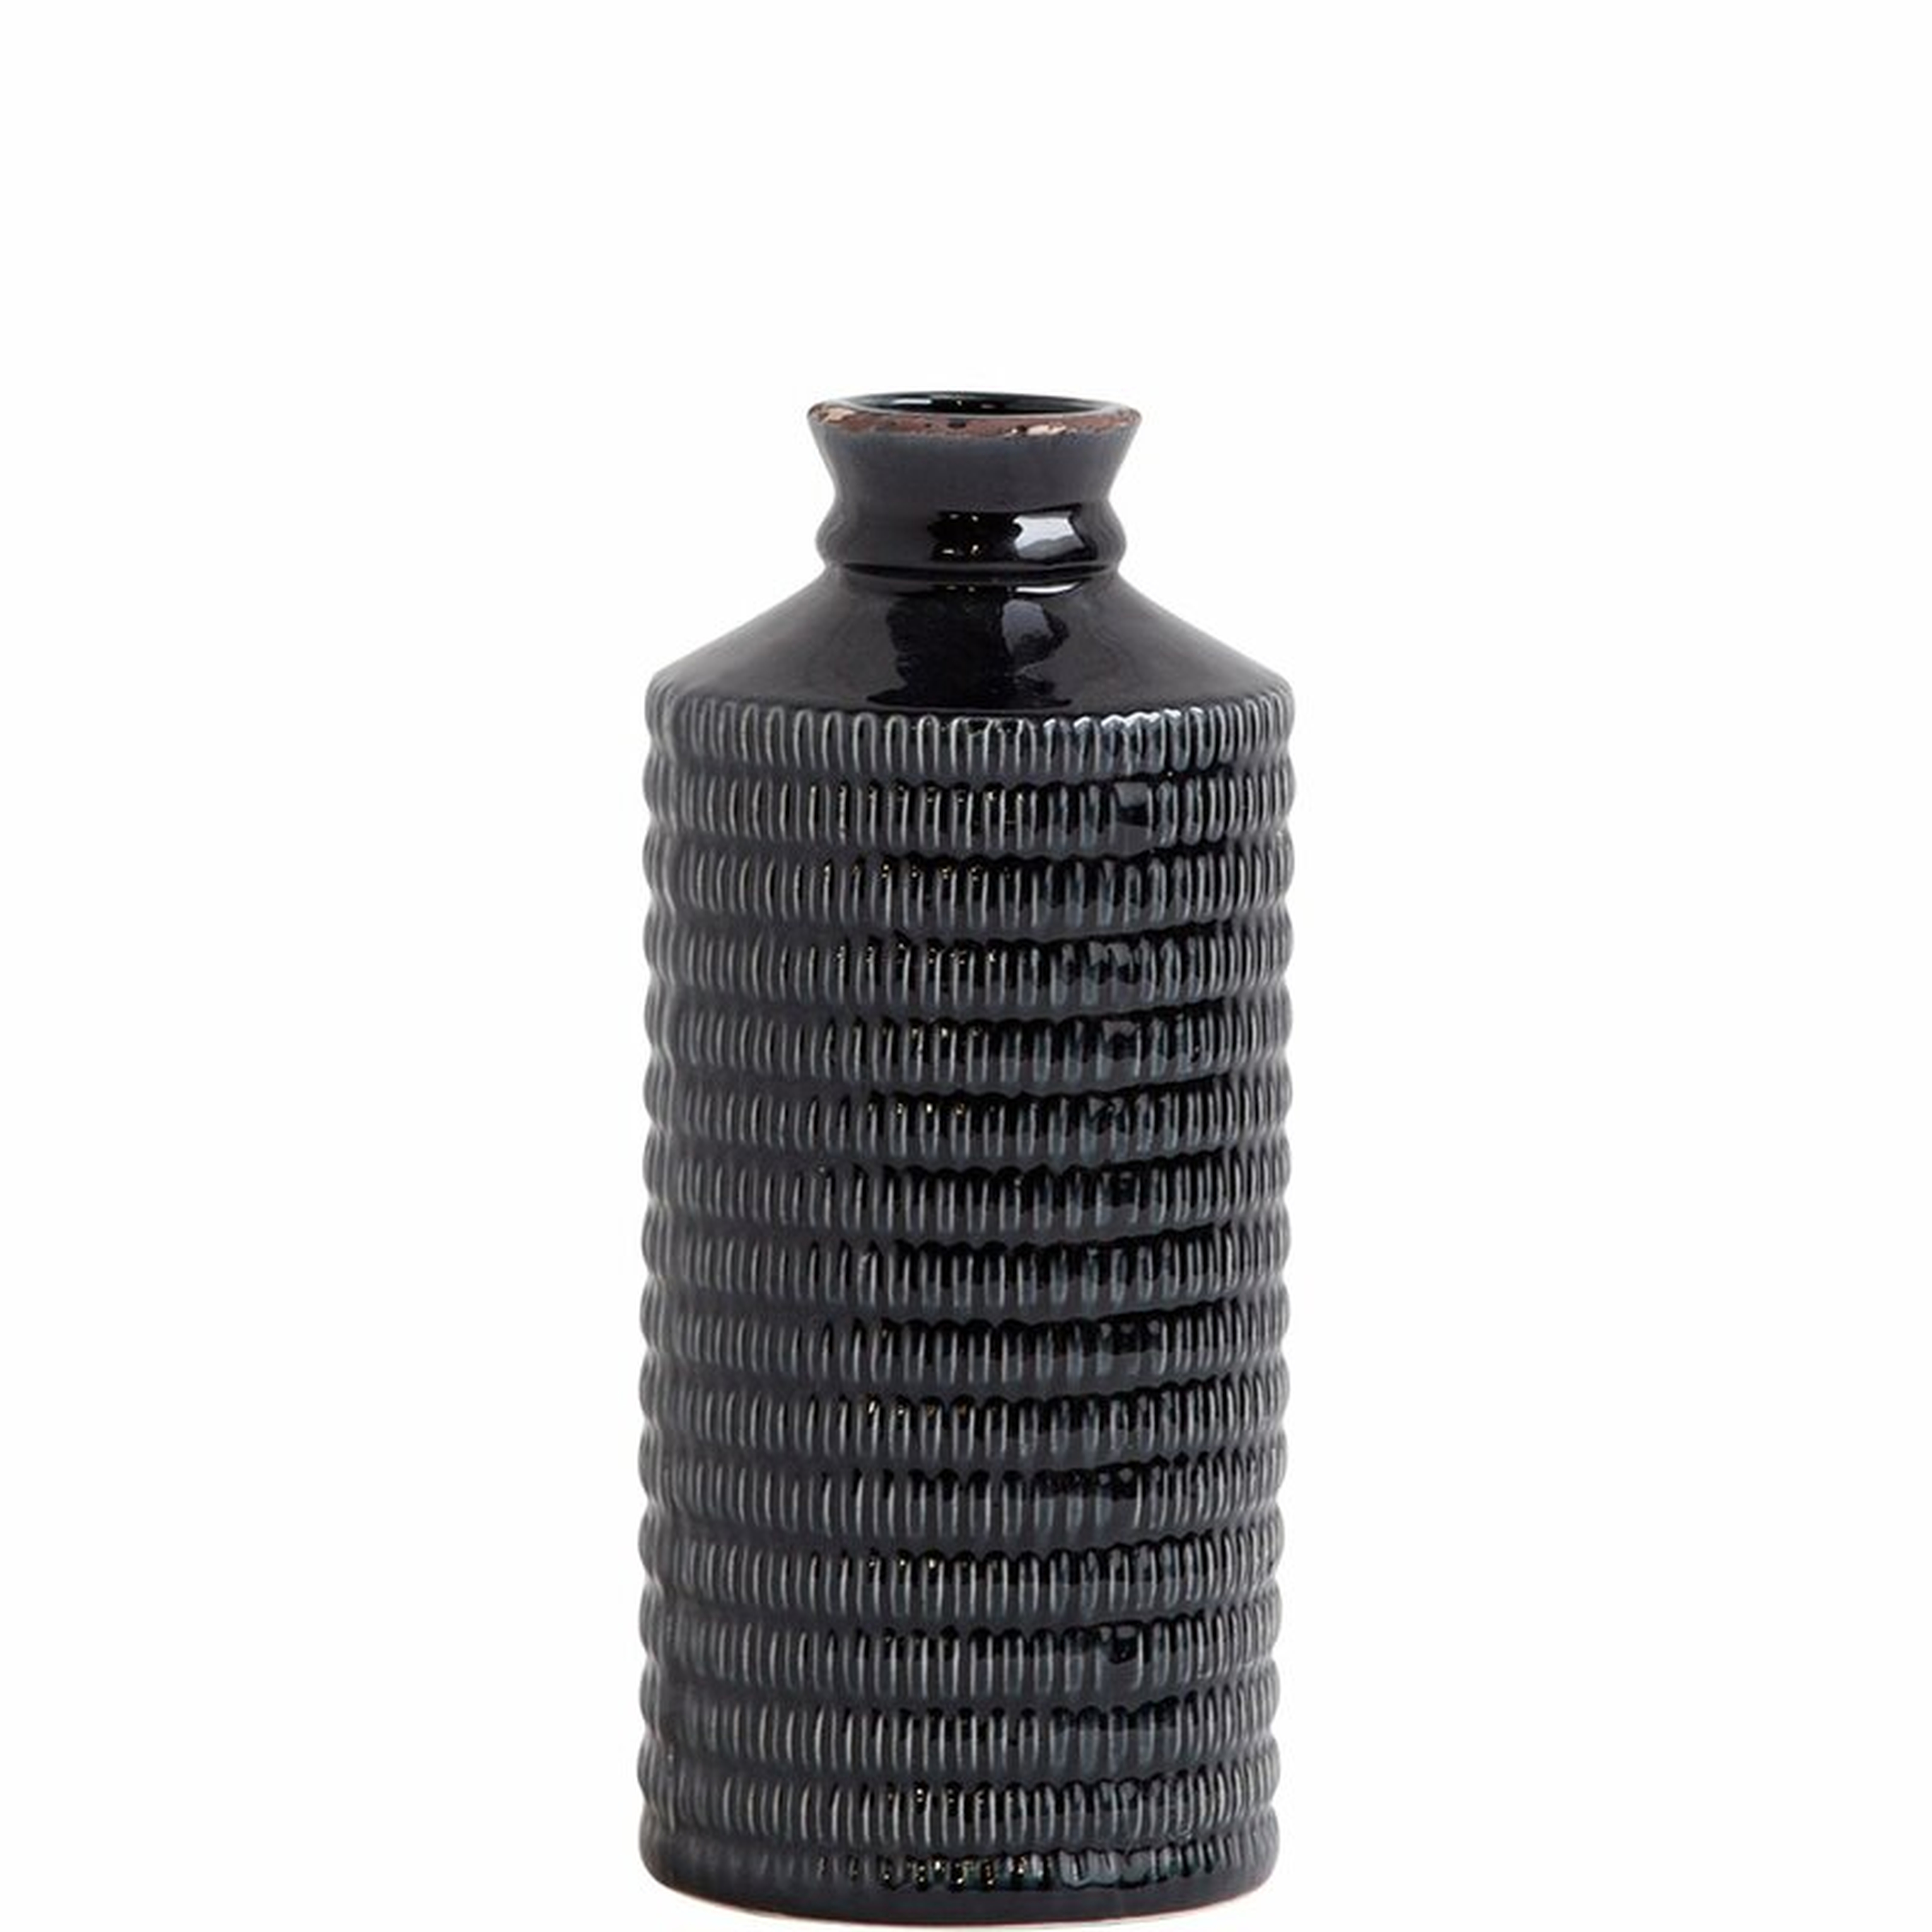 Alston Black Ceramic Table Vase Size: 17" H x 7" W x 7" D - Perigold